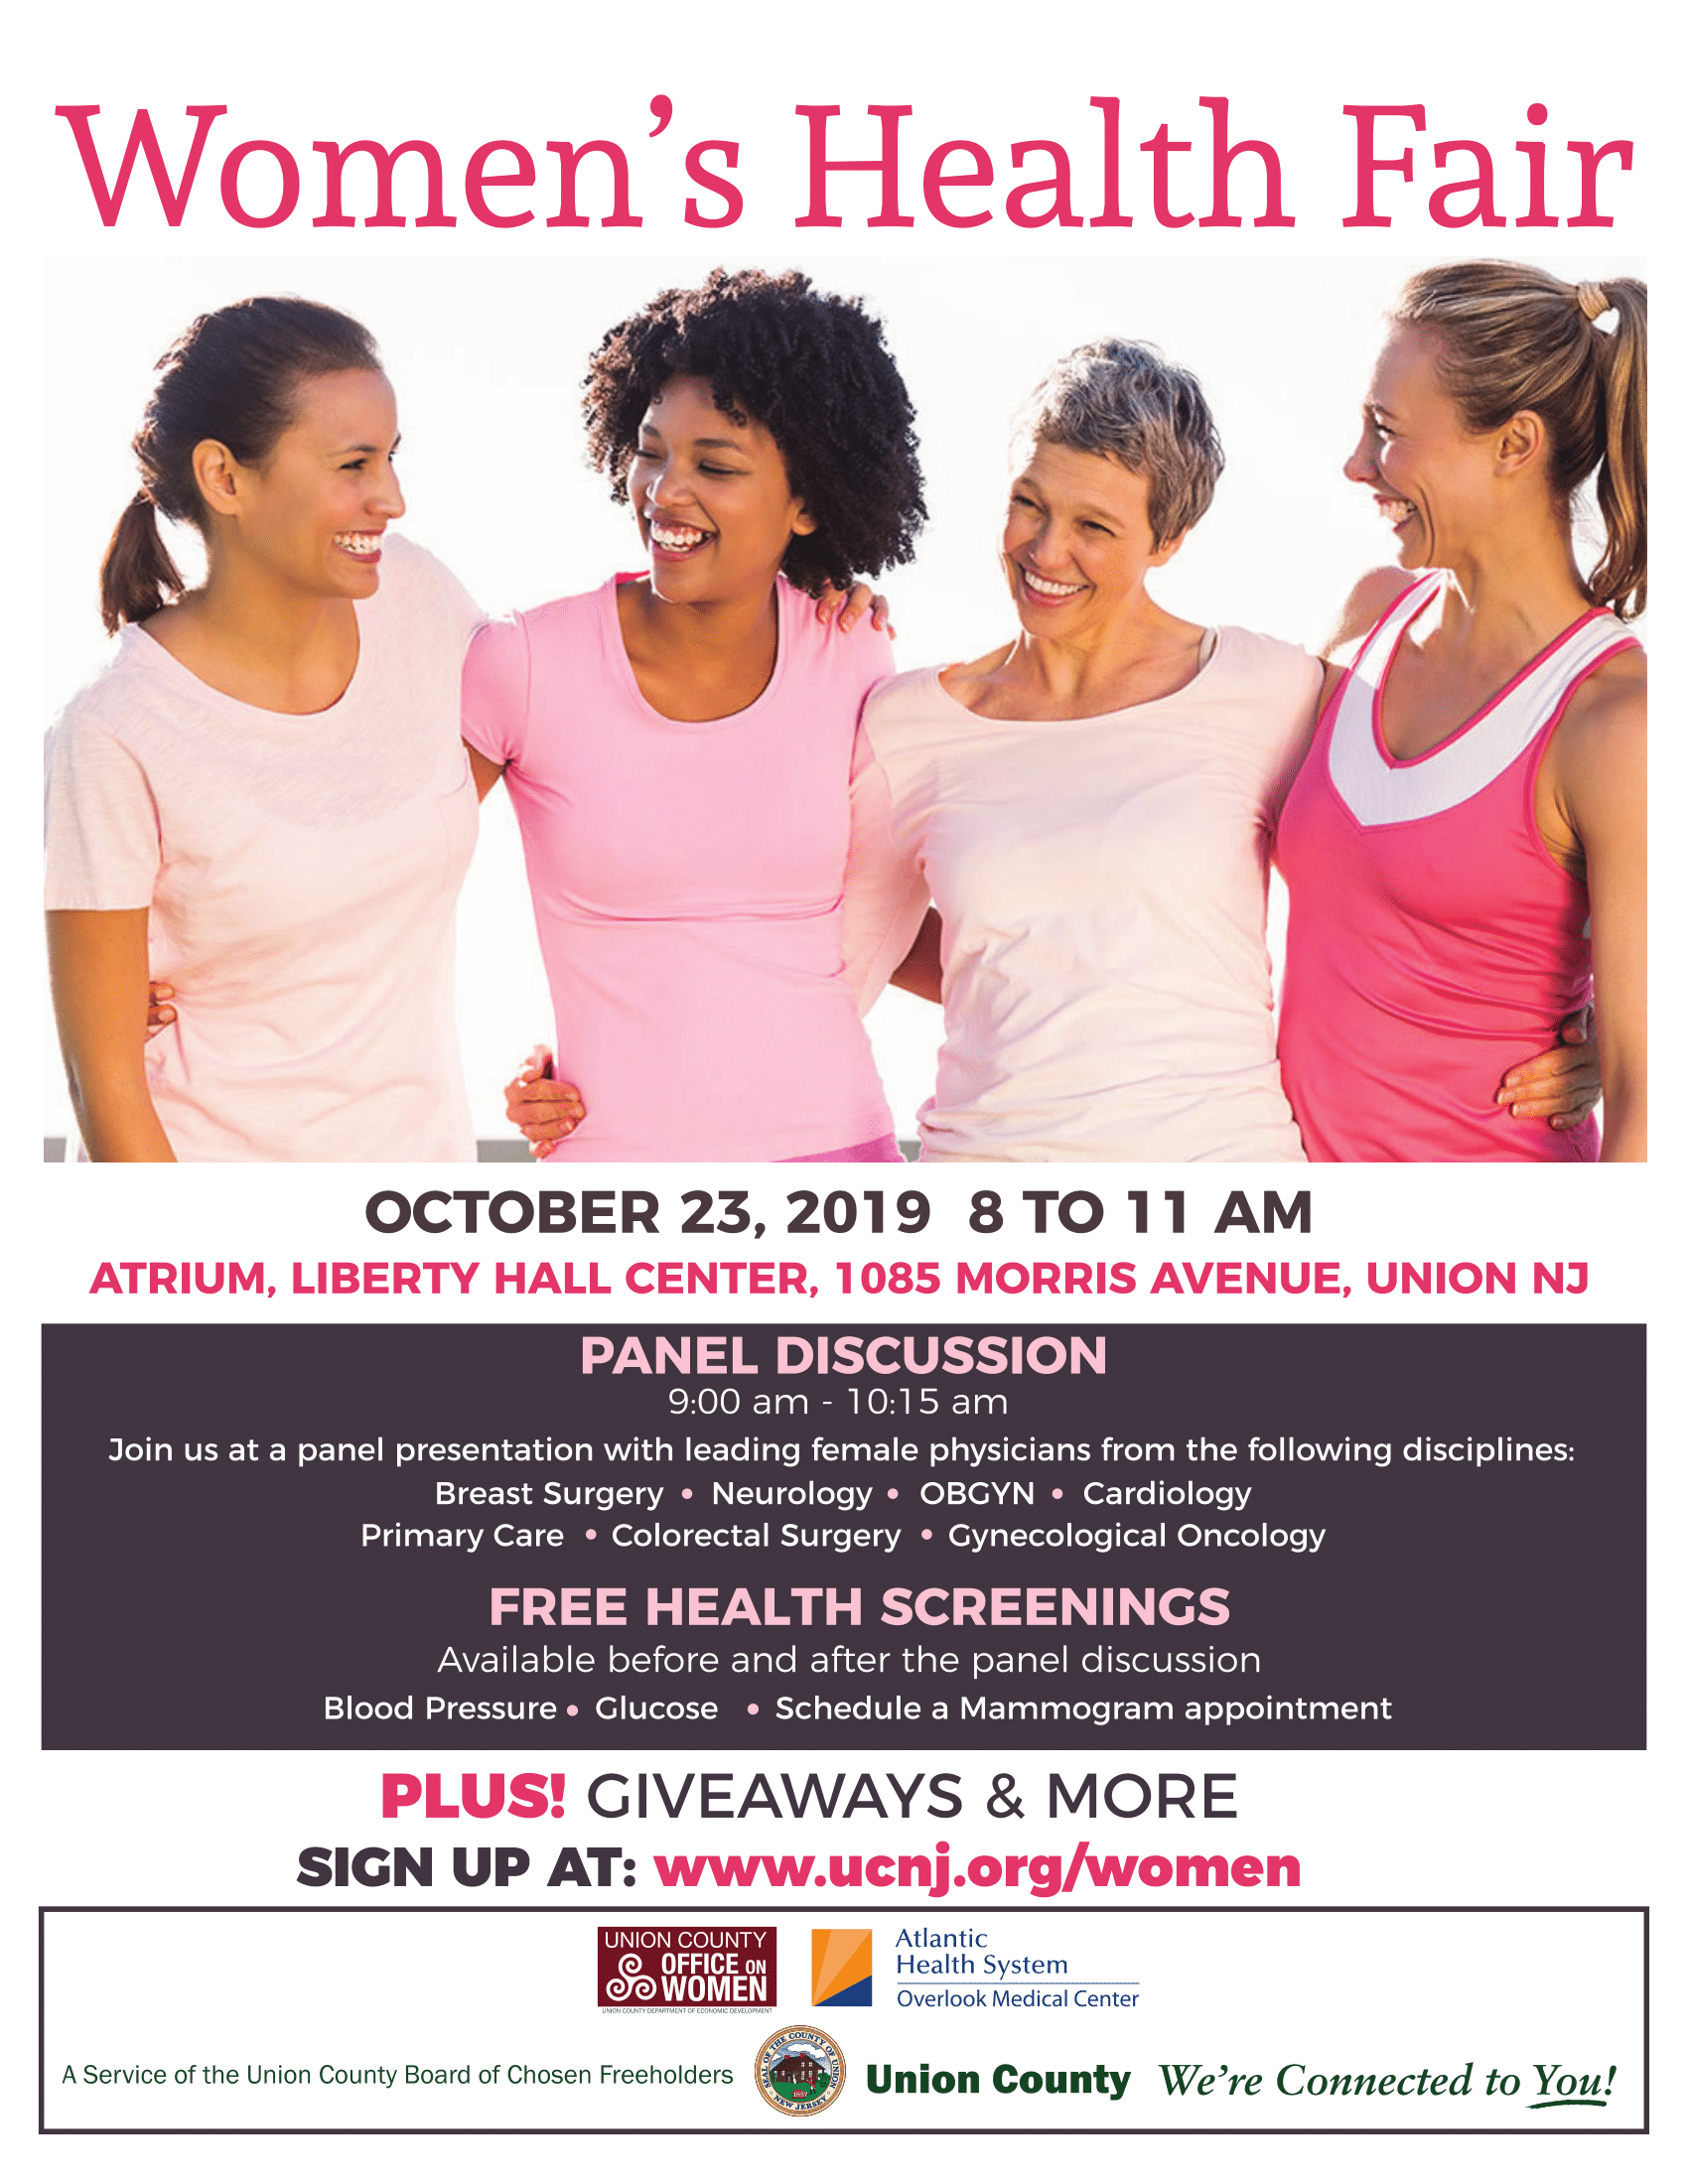 Women’s Health Fair Flyer October 2019 FINAL1 County of Union